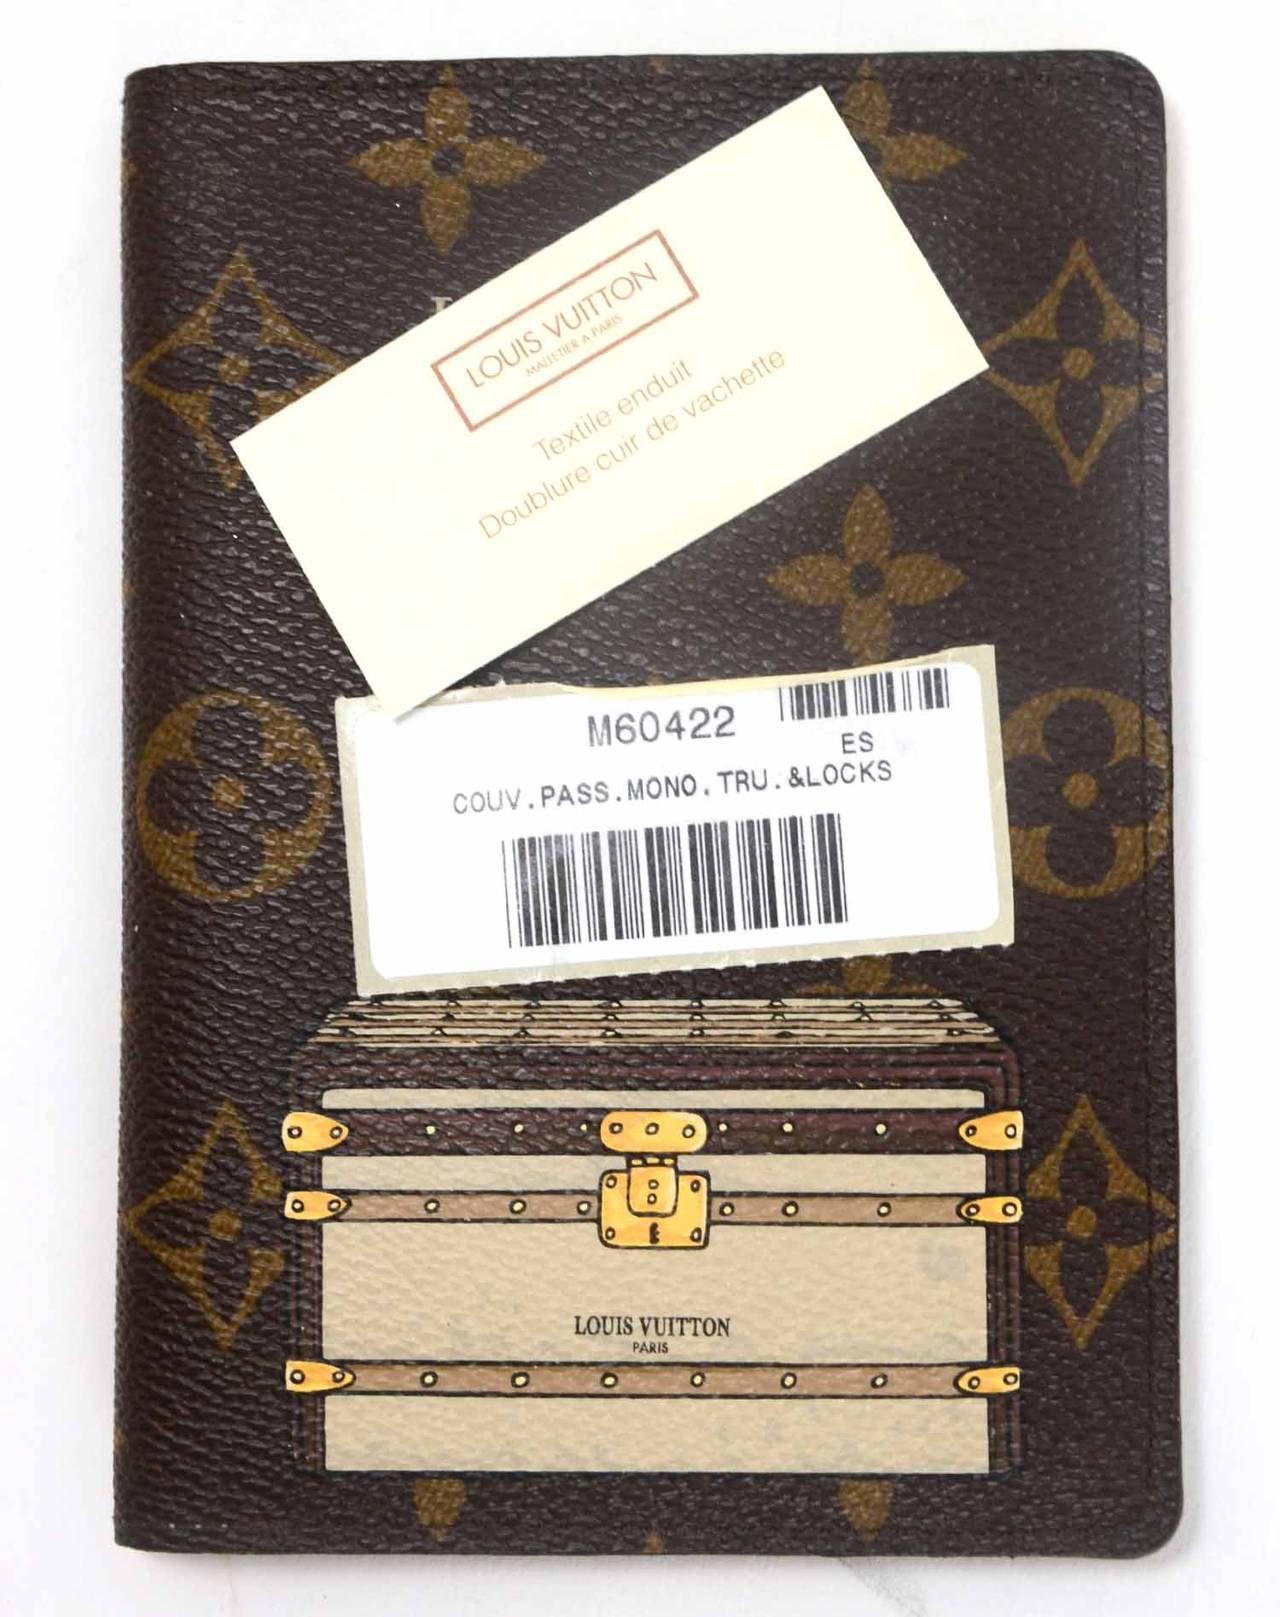 LOUIS VUITTON Monogram Limited Edition Trunks and Locks Passport